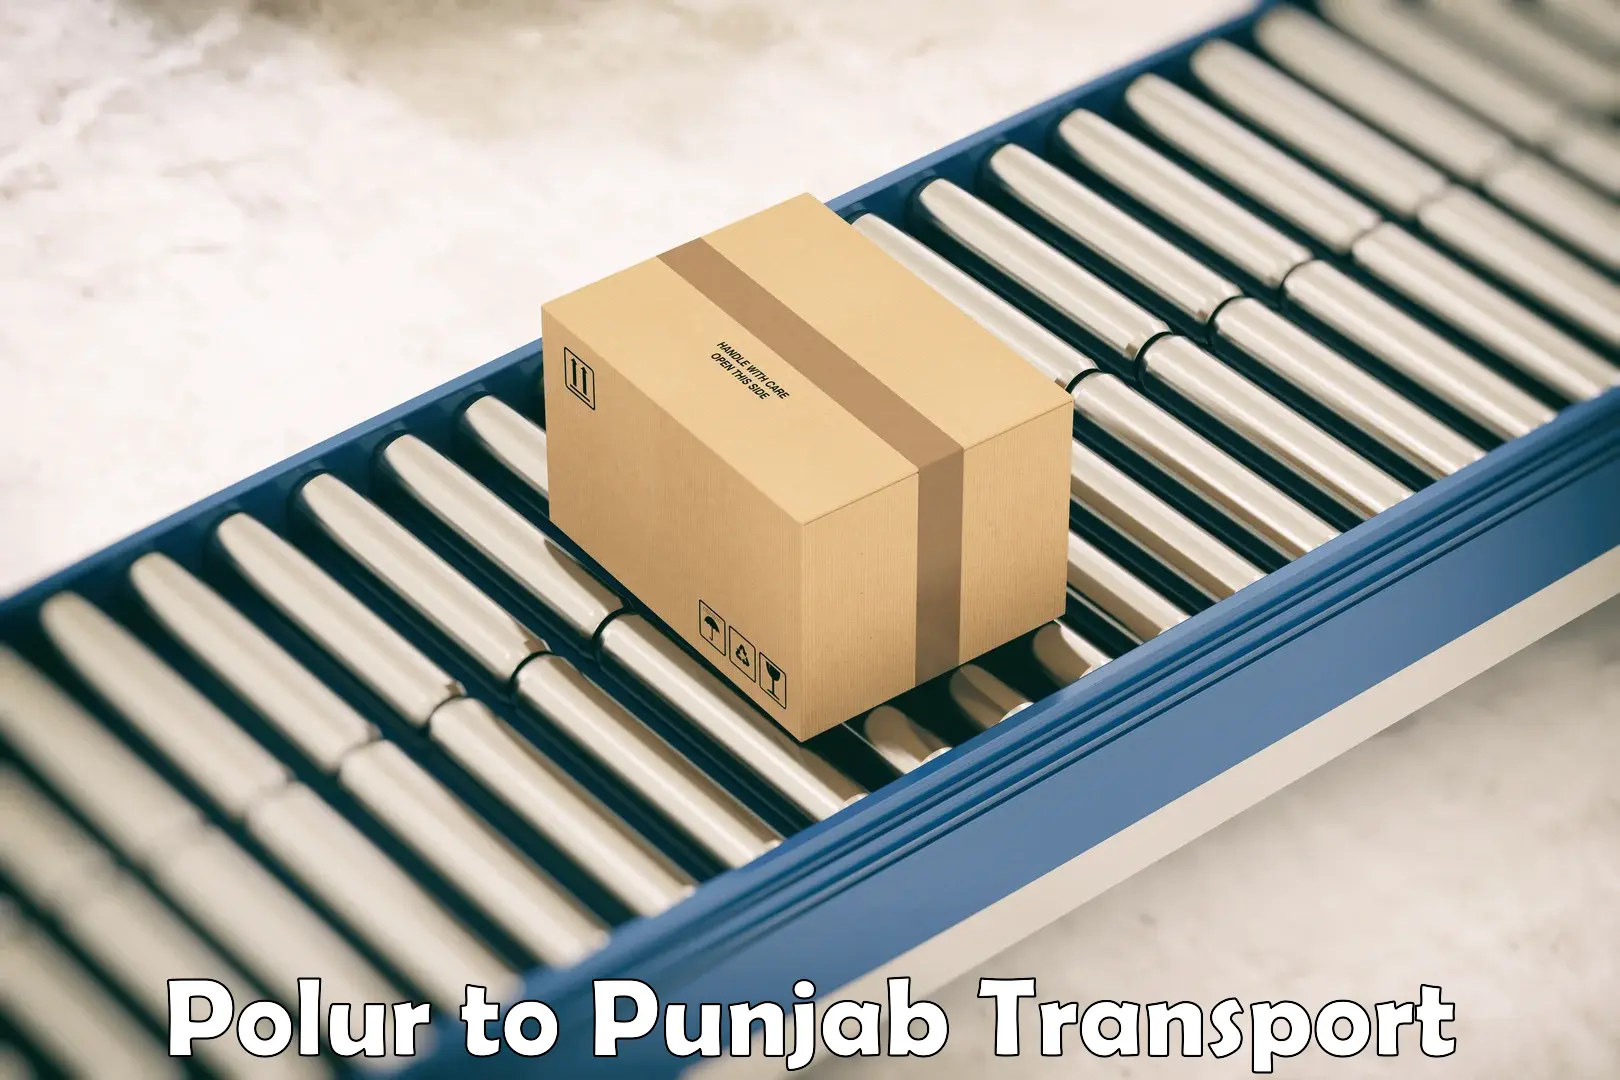 Delivery service Polur to Punjab